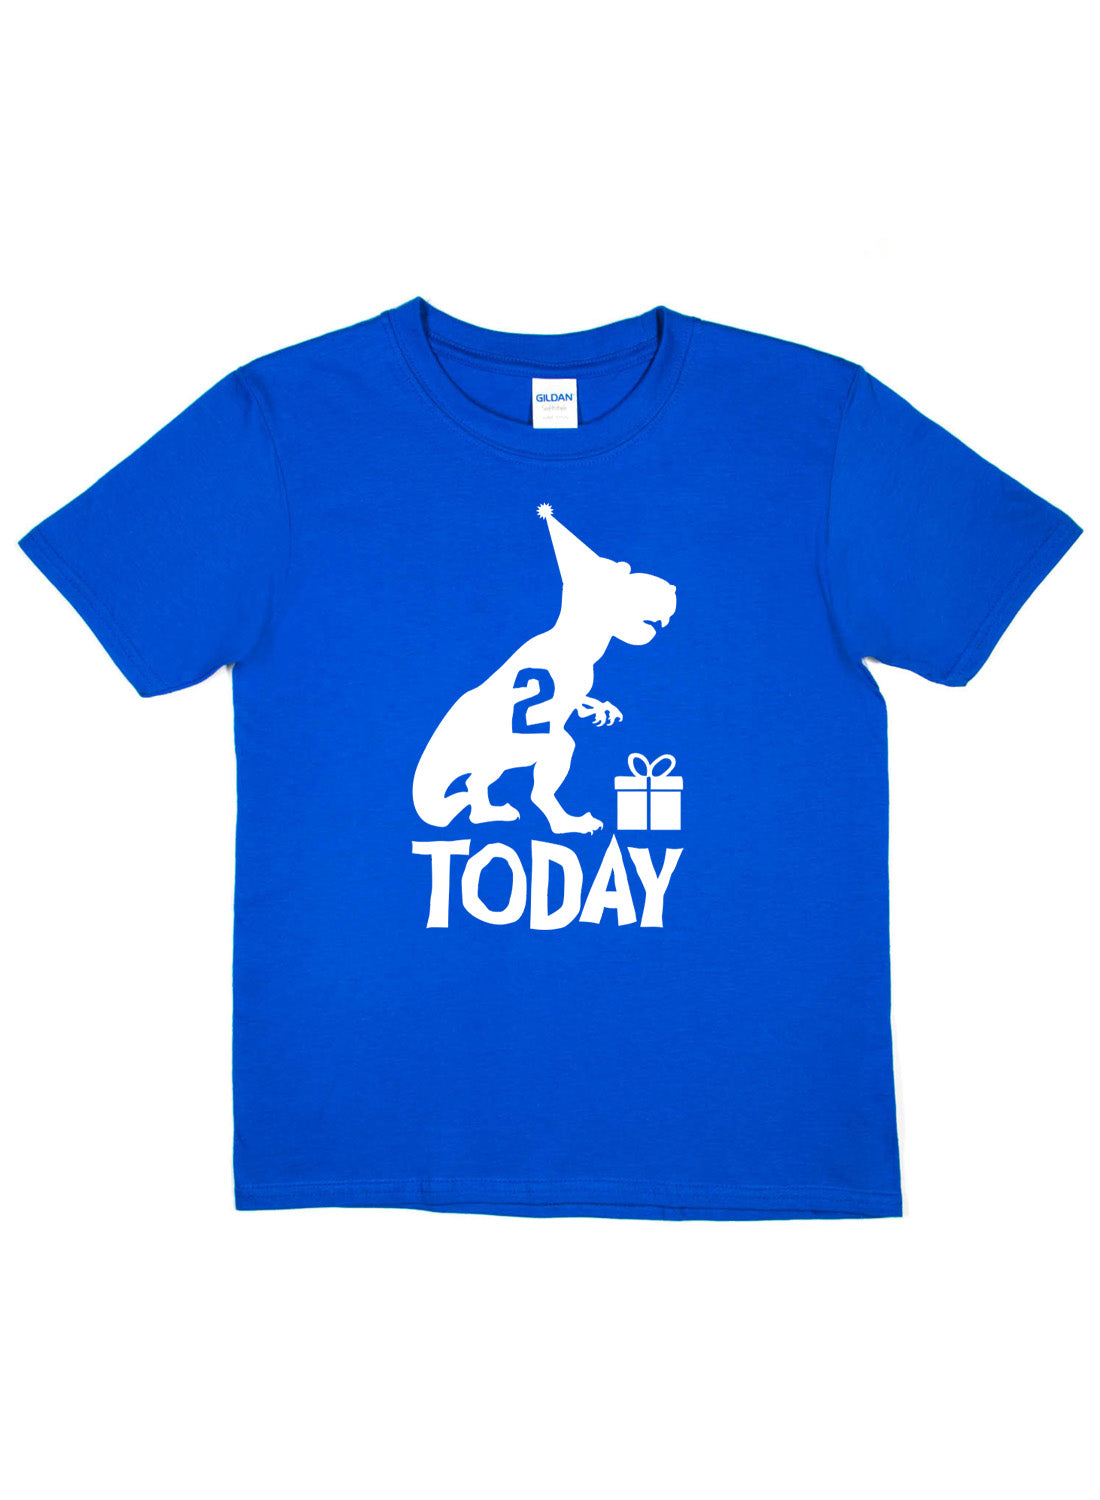 Birthday Kids 2 Today Age 2 Dinosaur Happy T-Shirt